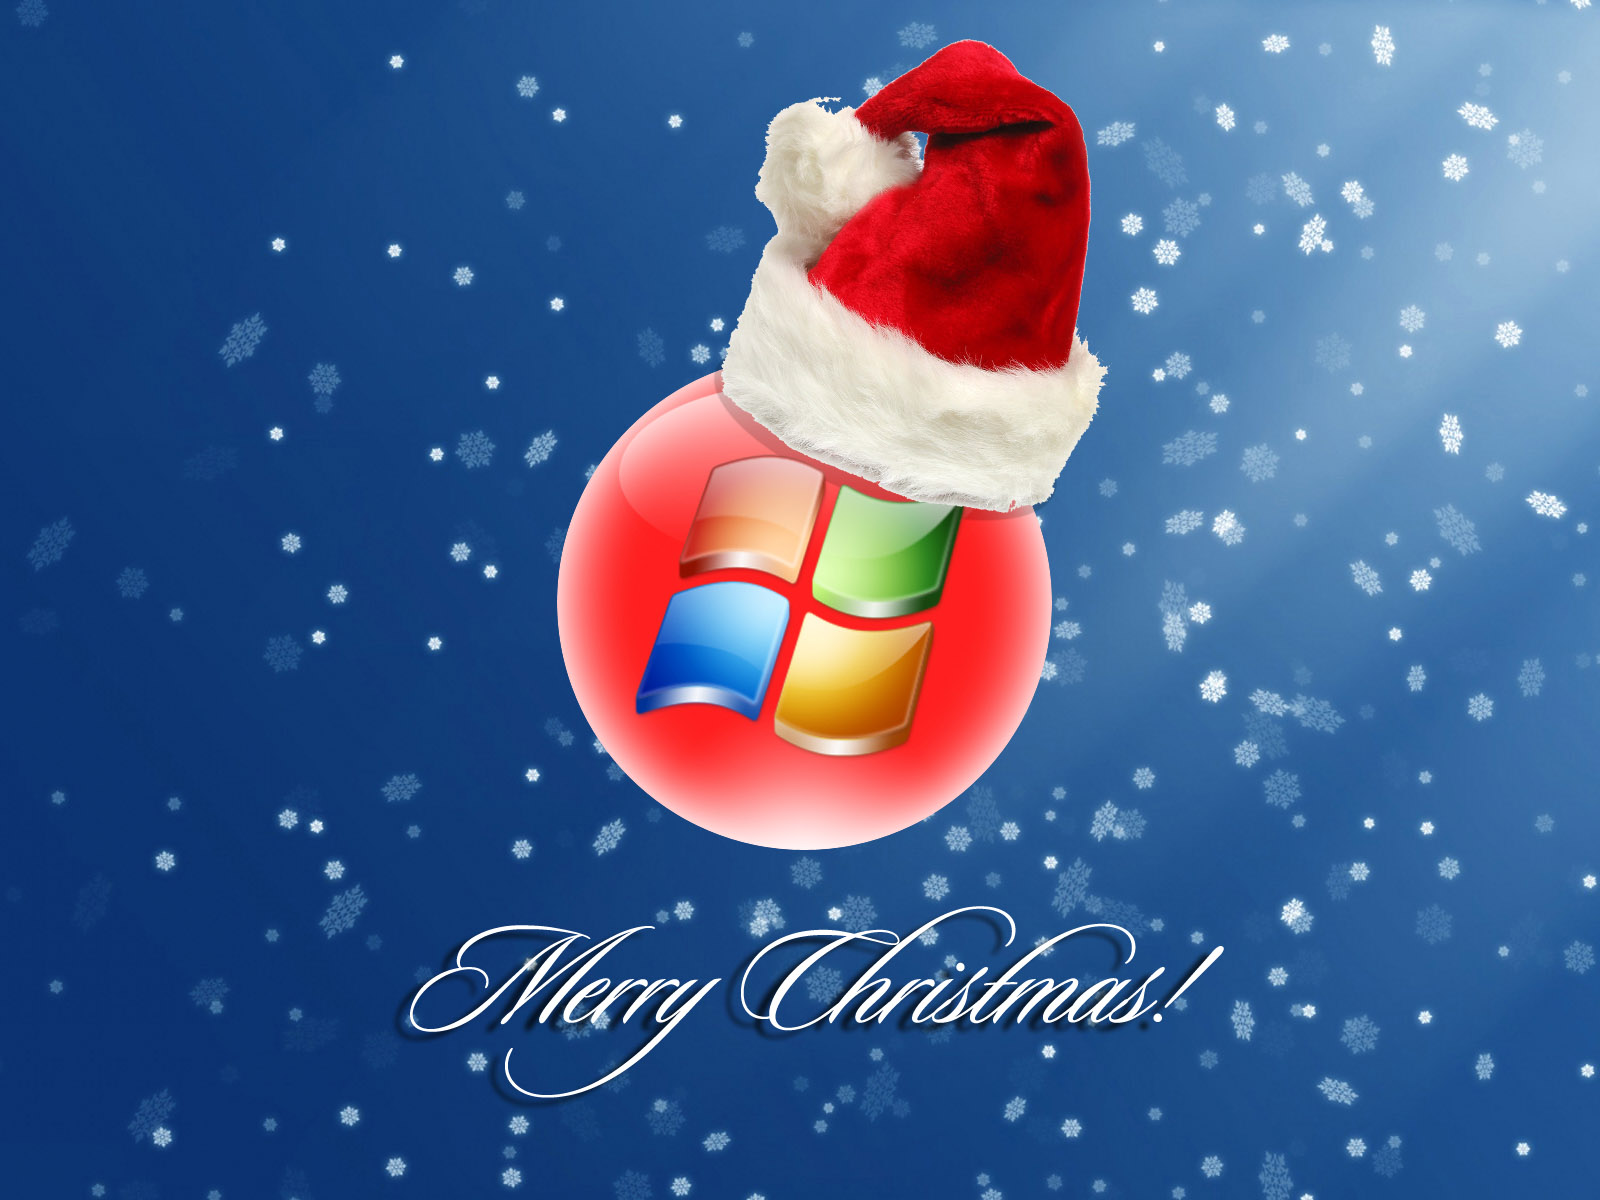 FREE 20+ Beautiful HD Christmas Desktop Wallpapers in PSD | Vector EPS